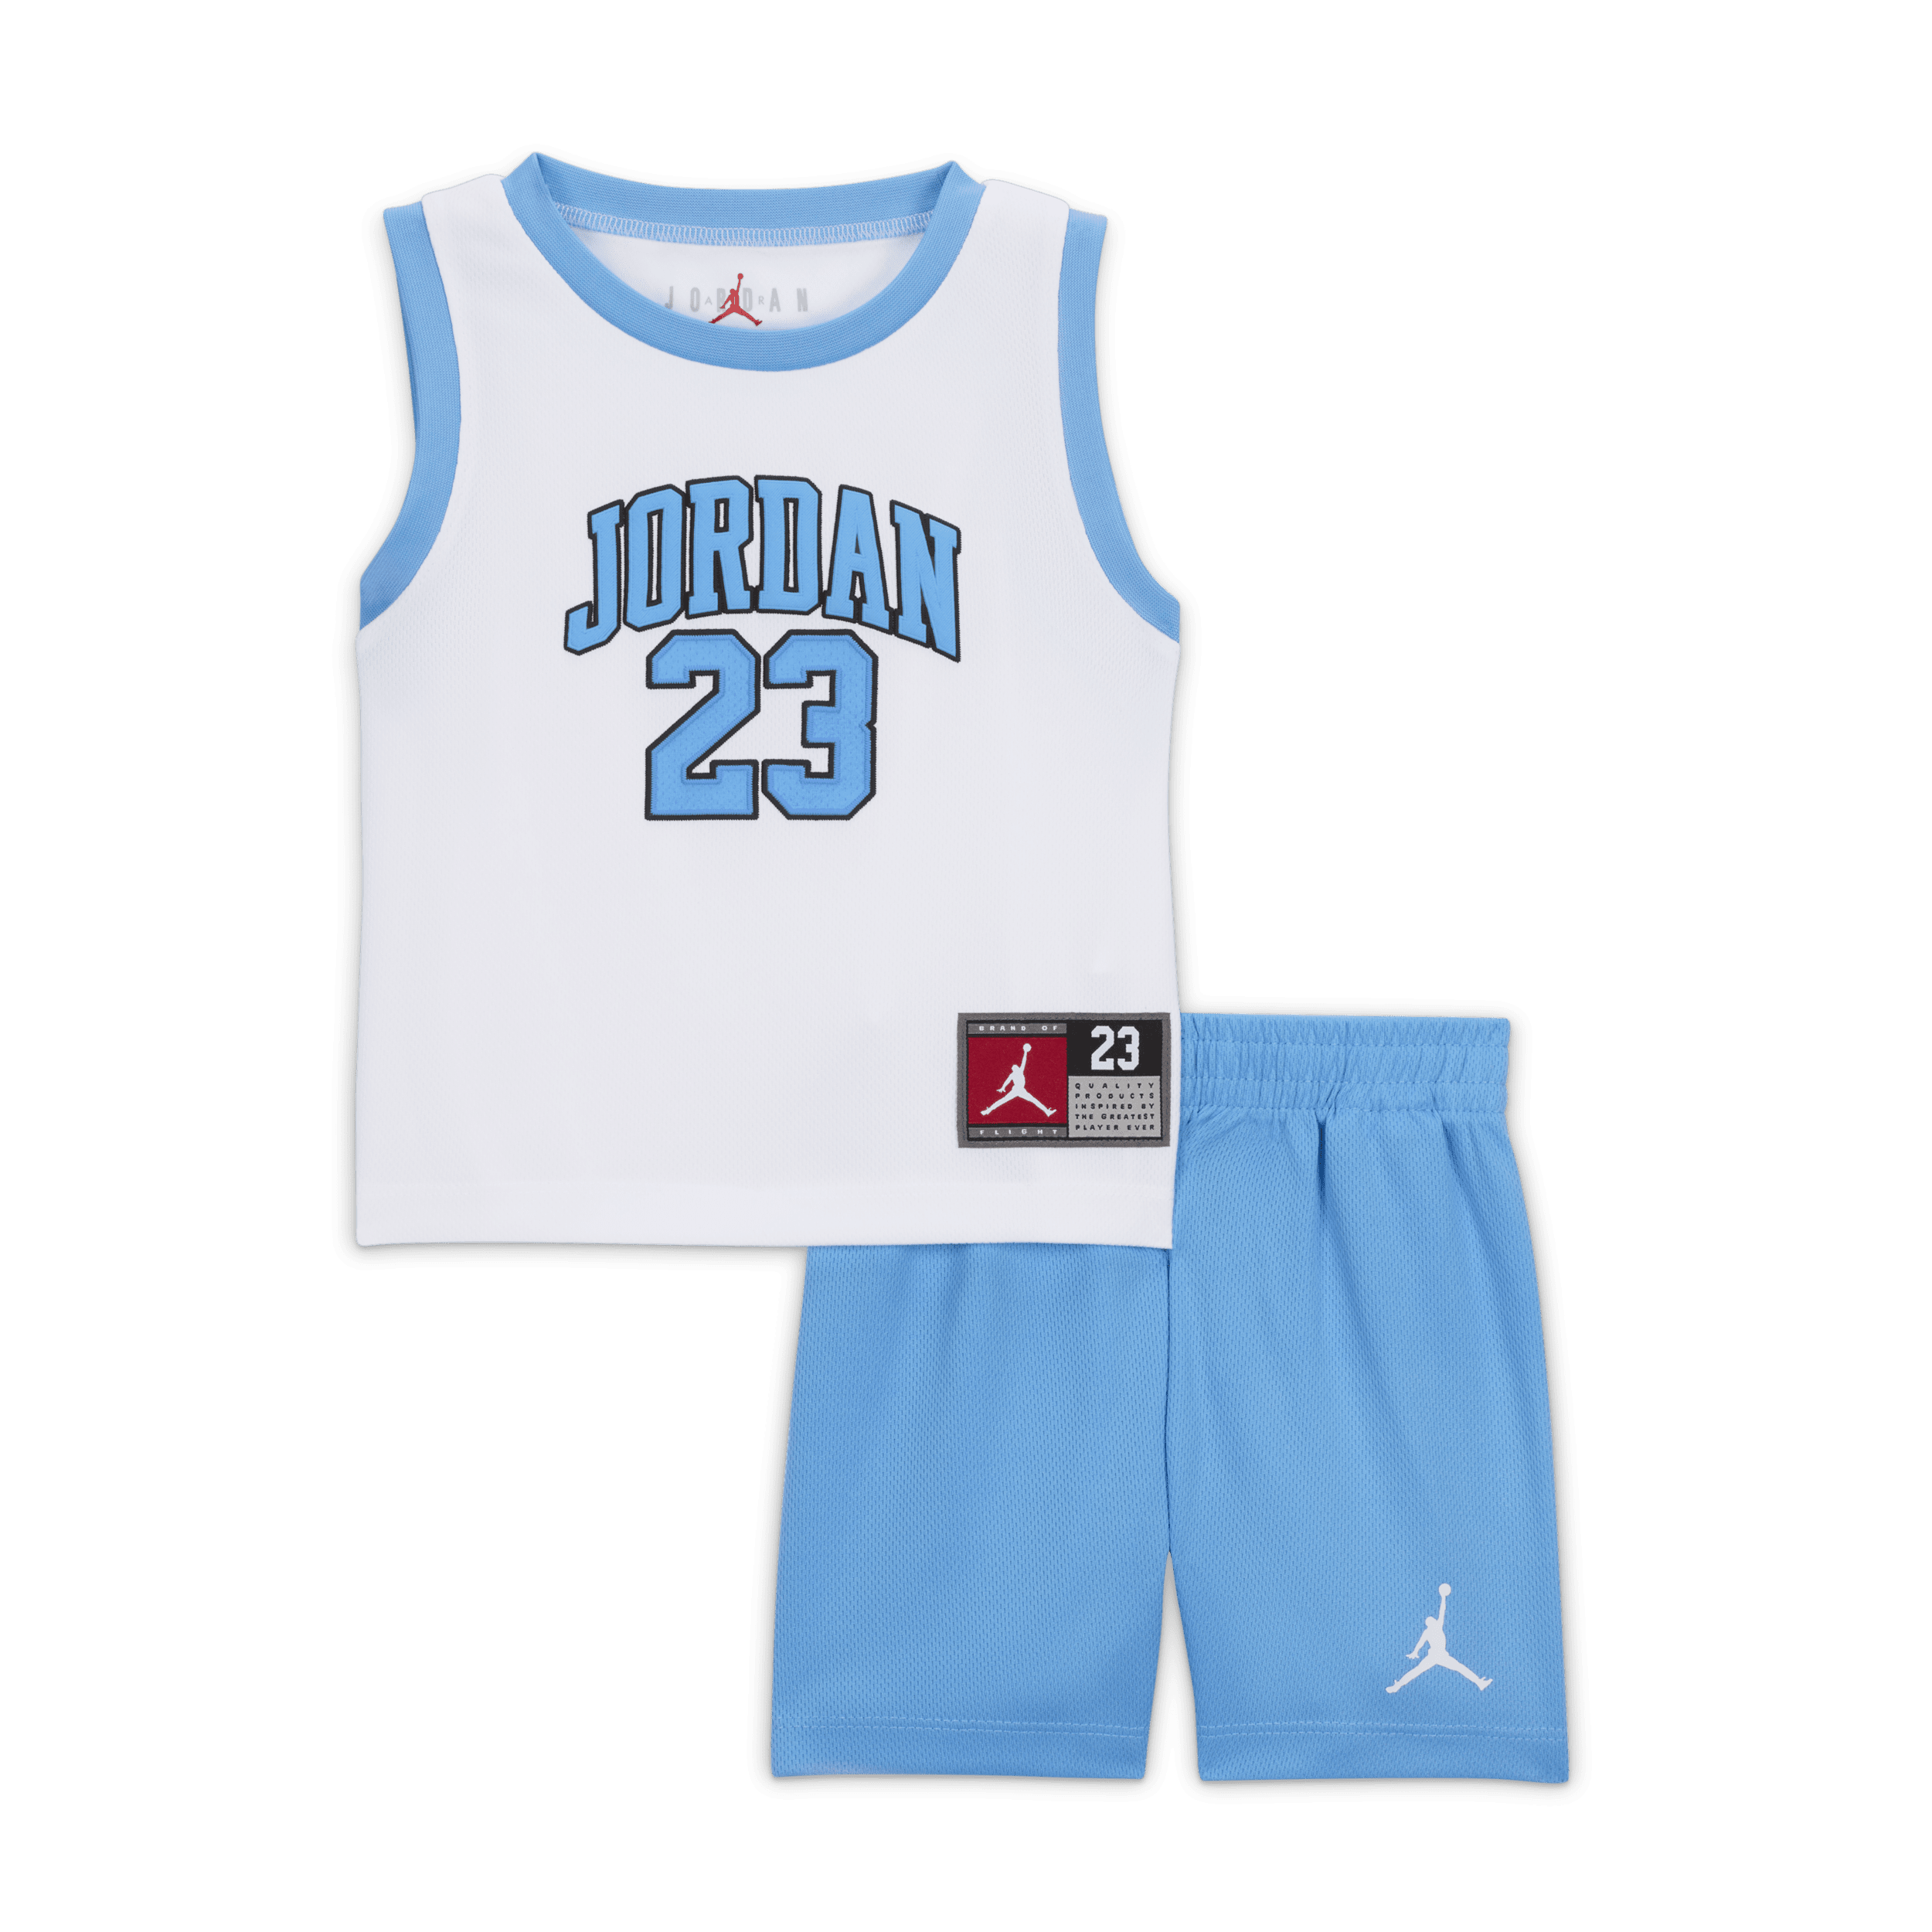 Jordan 23 Jersey Baby (12-24M) 2-delige jerseyset - Blauw